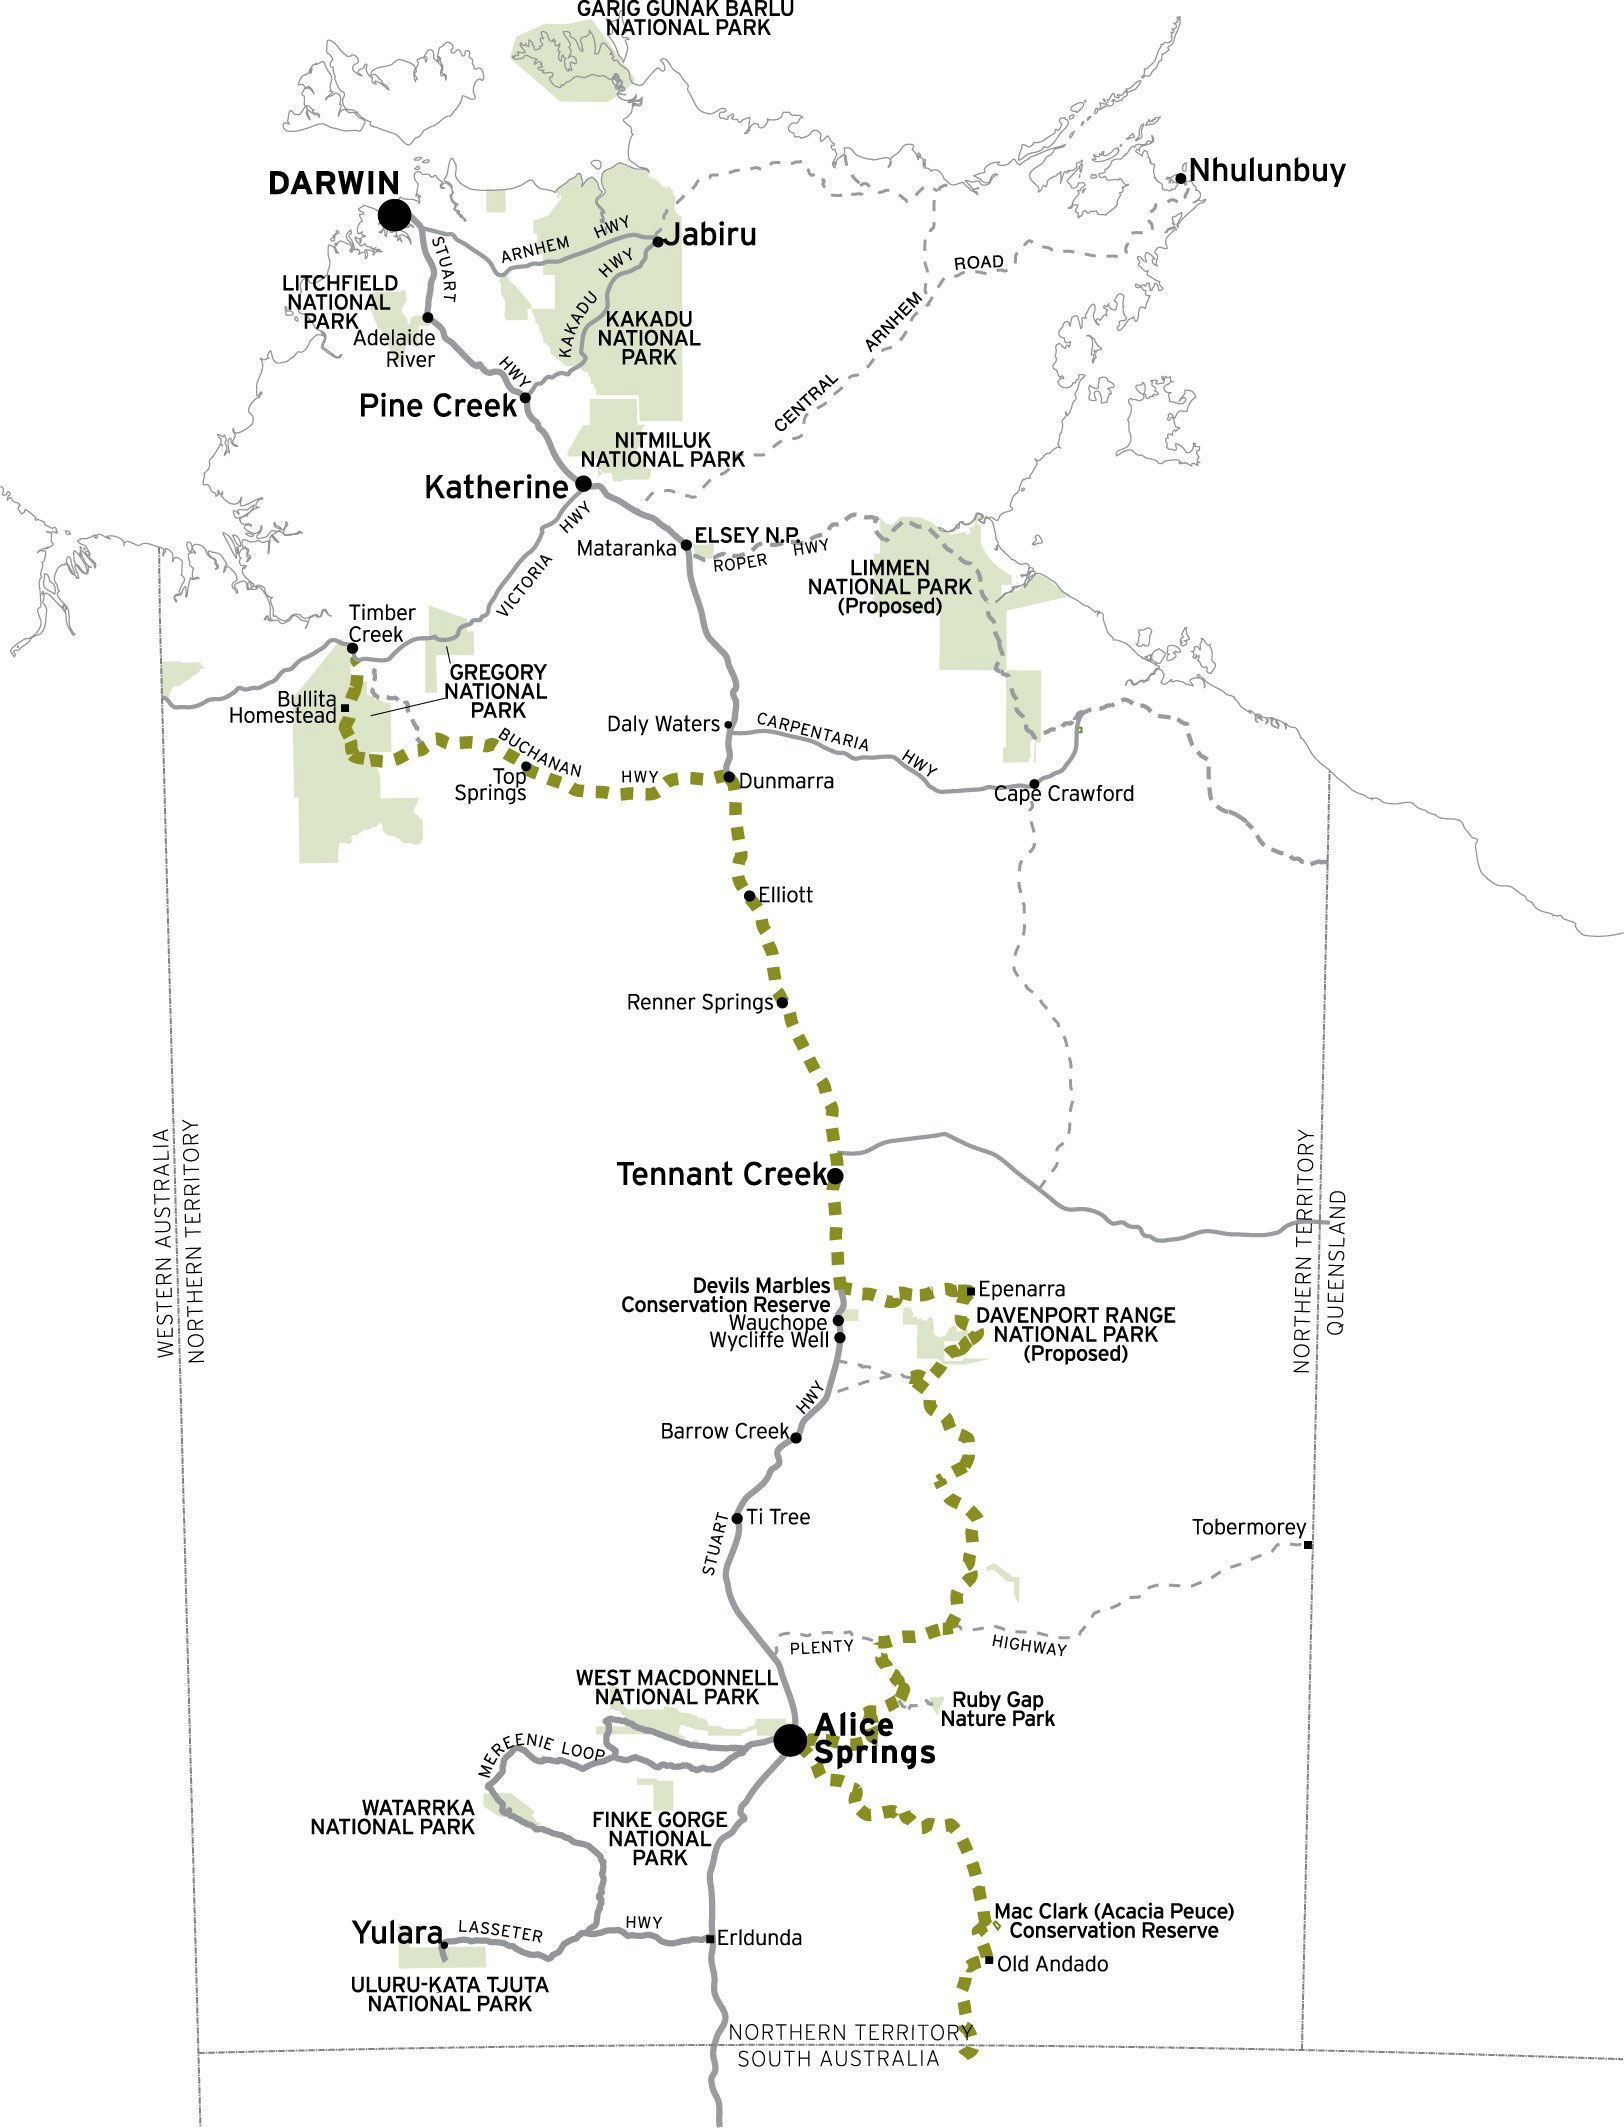 Binns Track from Mt Darwin to Timber Creek  in Australia - 4wd access  | Credits Ranger Mr Binns and ParksAustralia